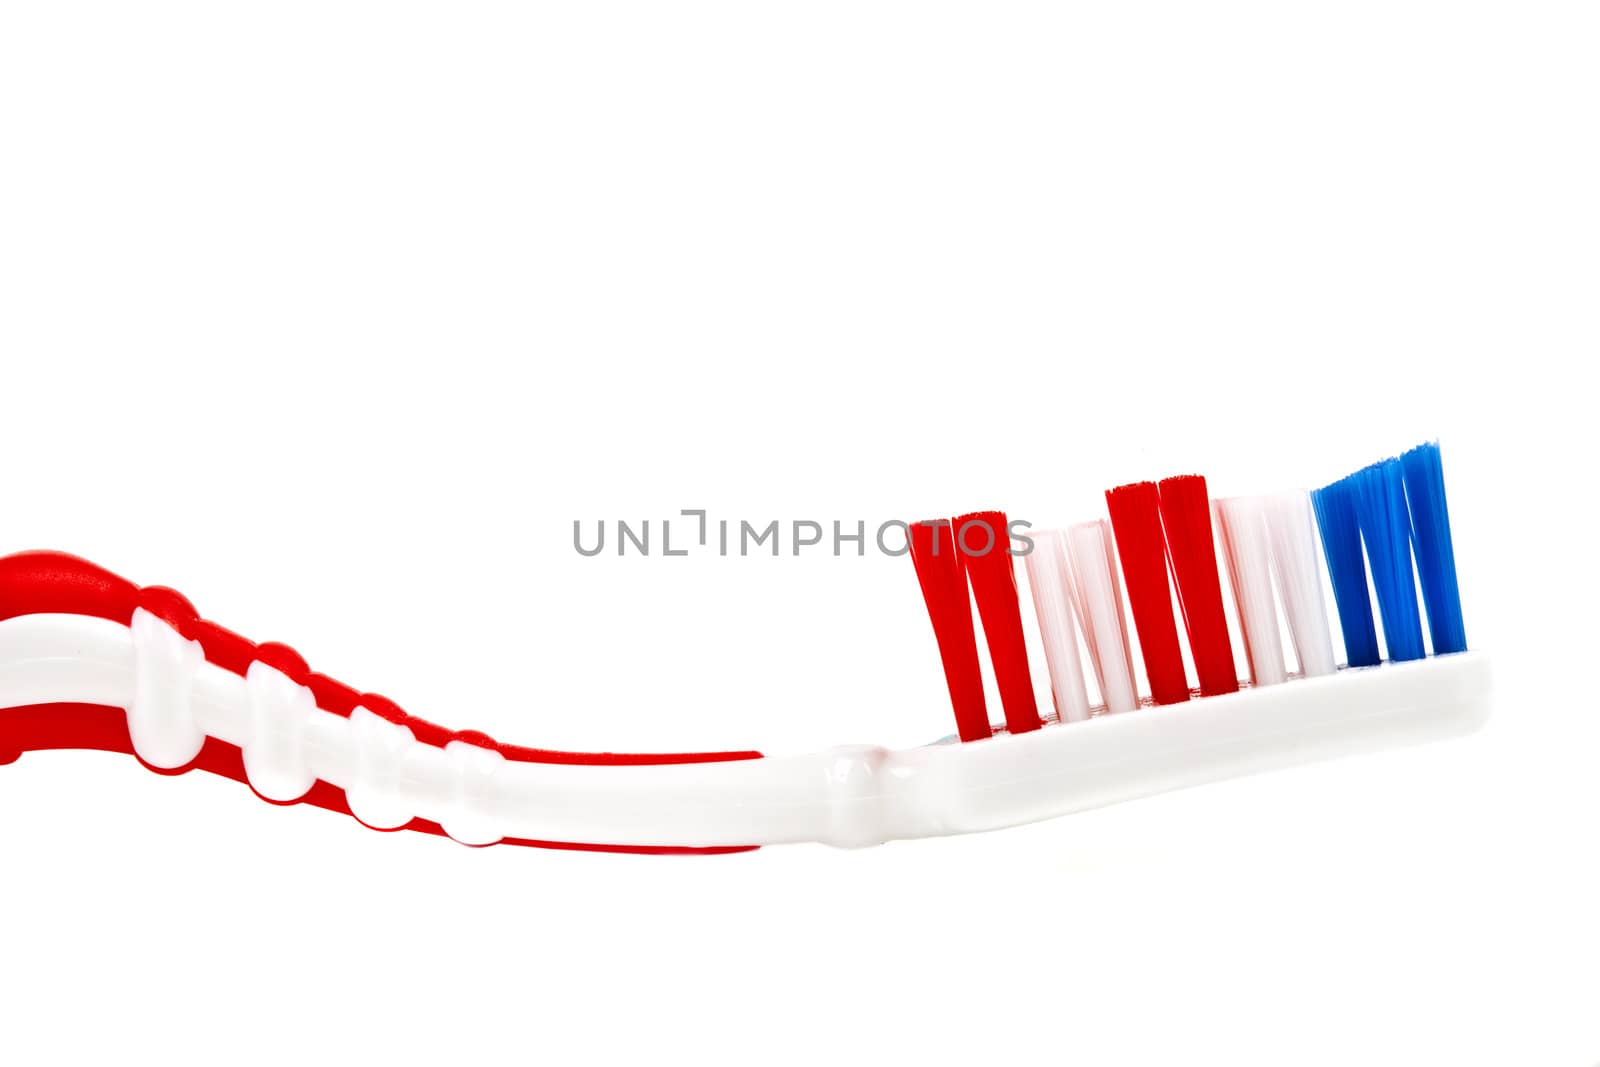 Toothbrush by chrisdorney